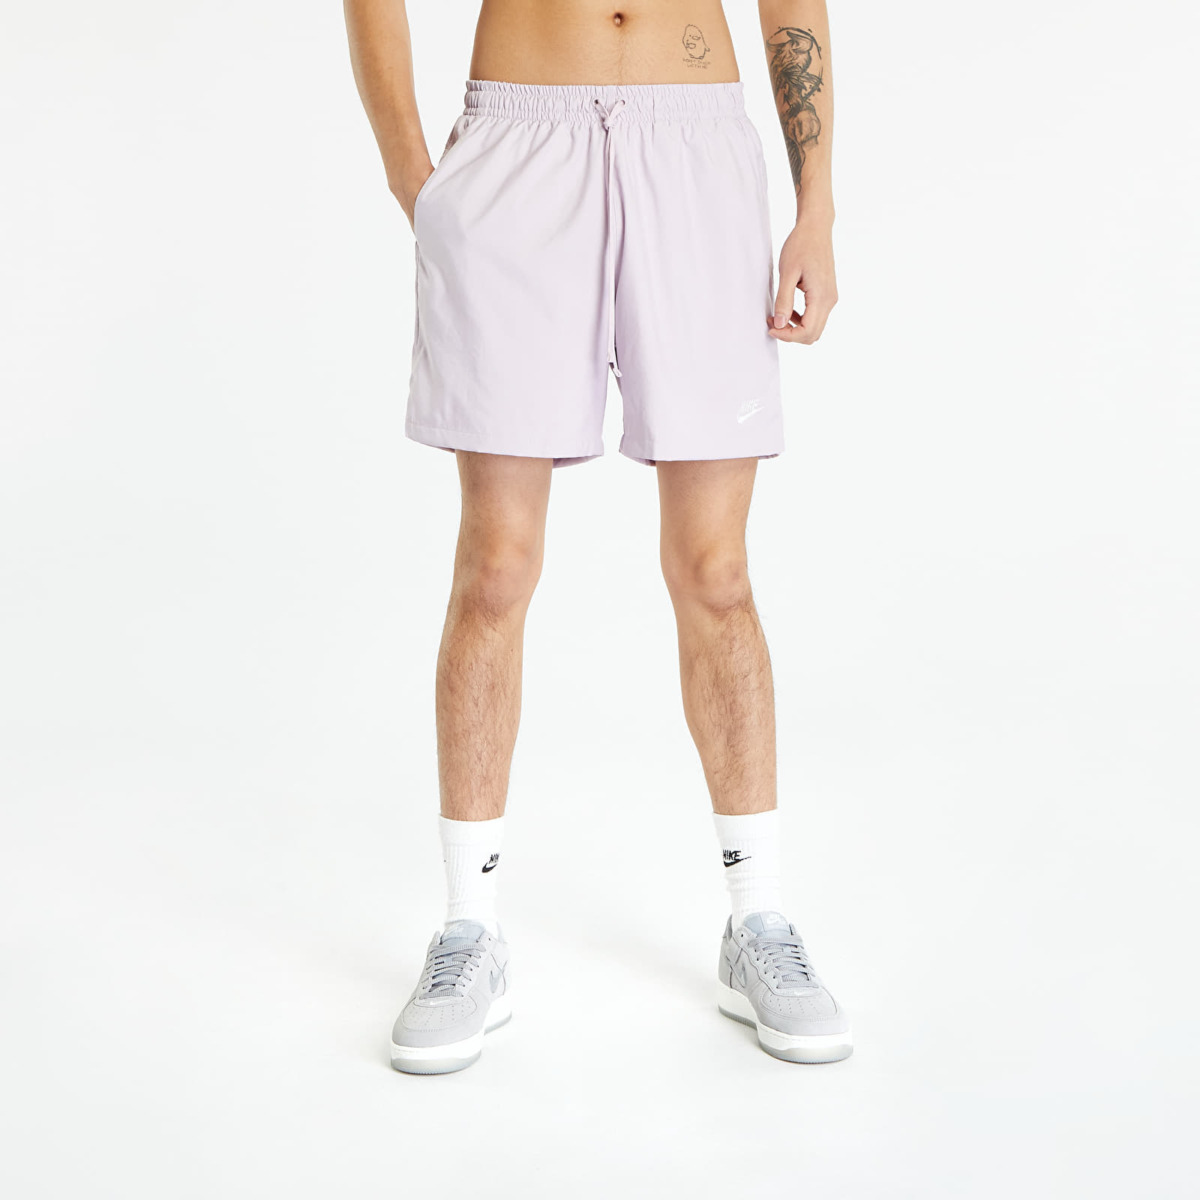 Footshop - Gents Sportswear in White Nike GOOFASH